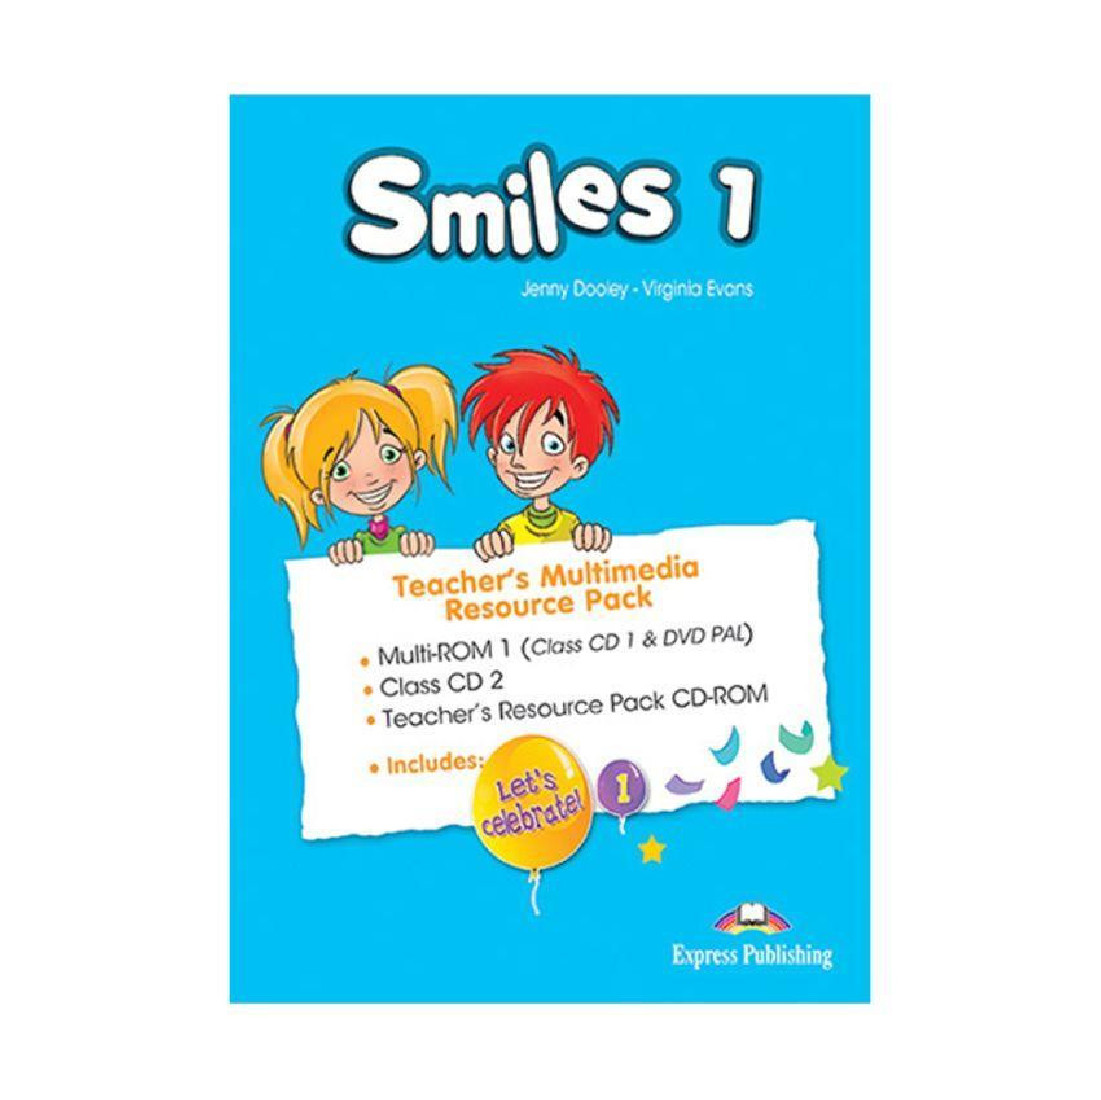 SMILEYS 1 TEACHERS MULTIMEDIA RECOURSE PACK